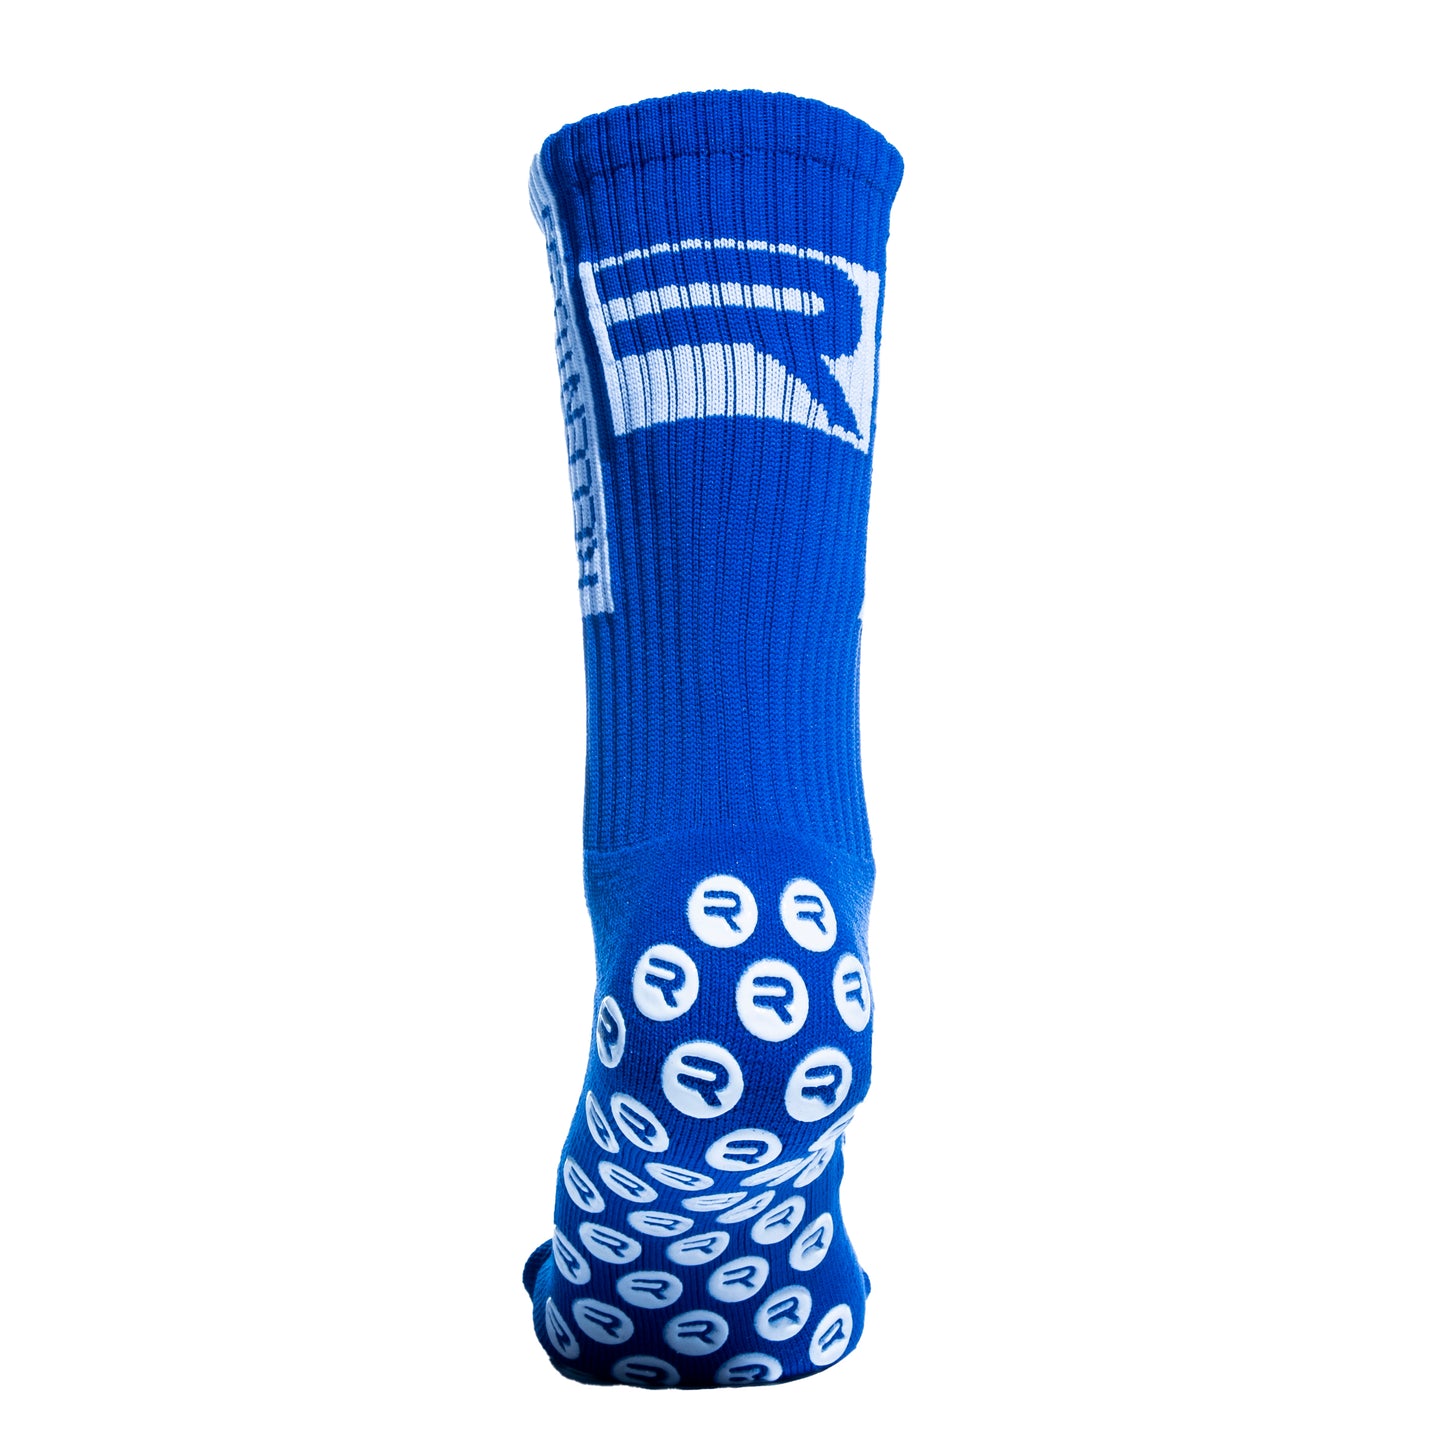 Relentless Grip Sock - Blue